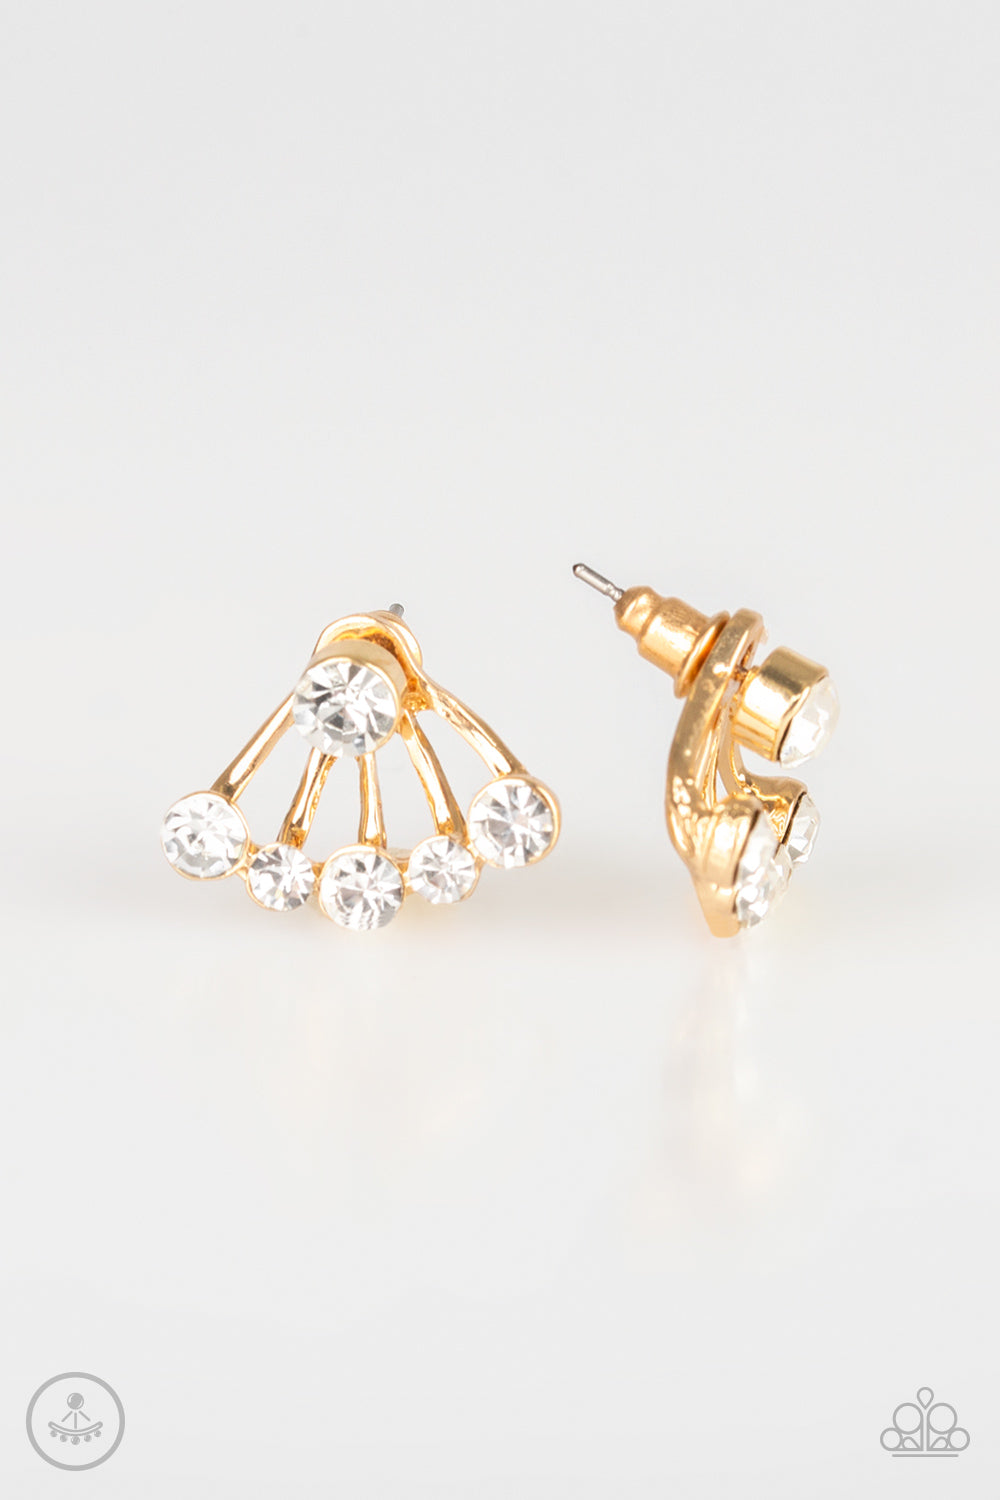 Jeweled Jubilee - Gold with Rhinestone Earrings - Paparazzi Accessories